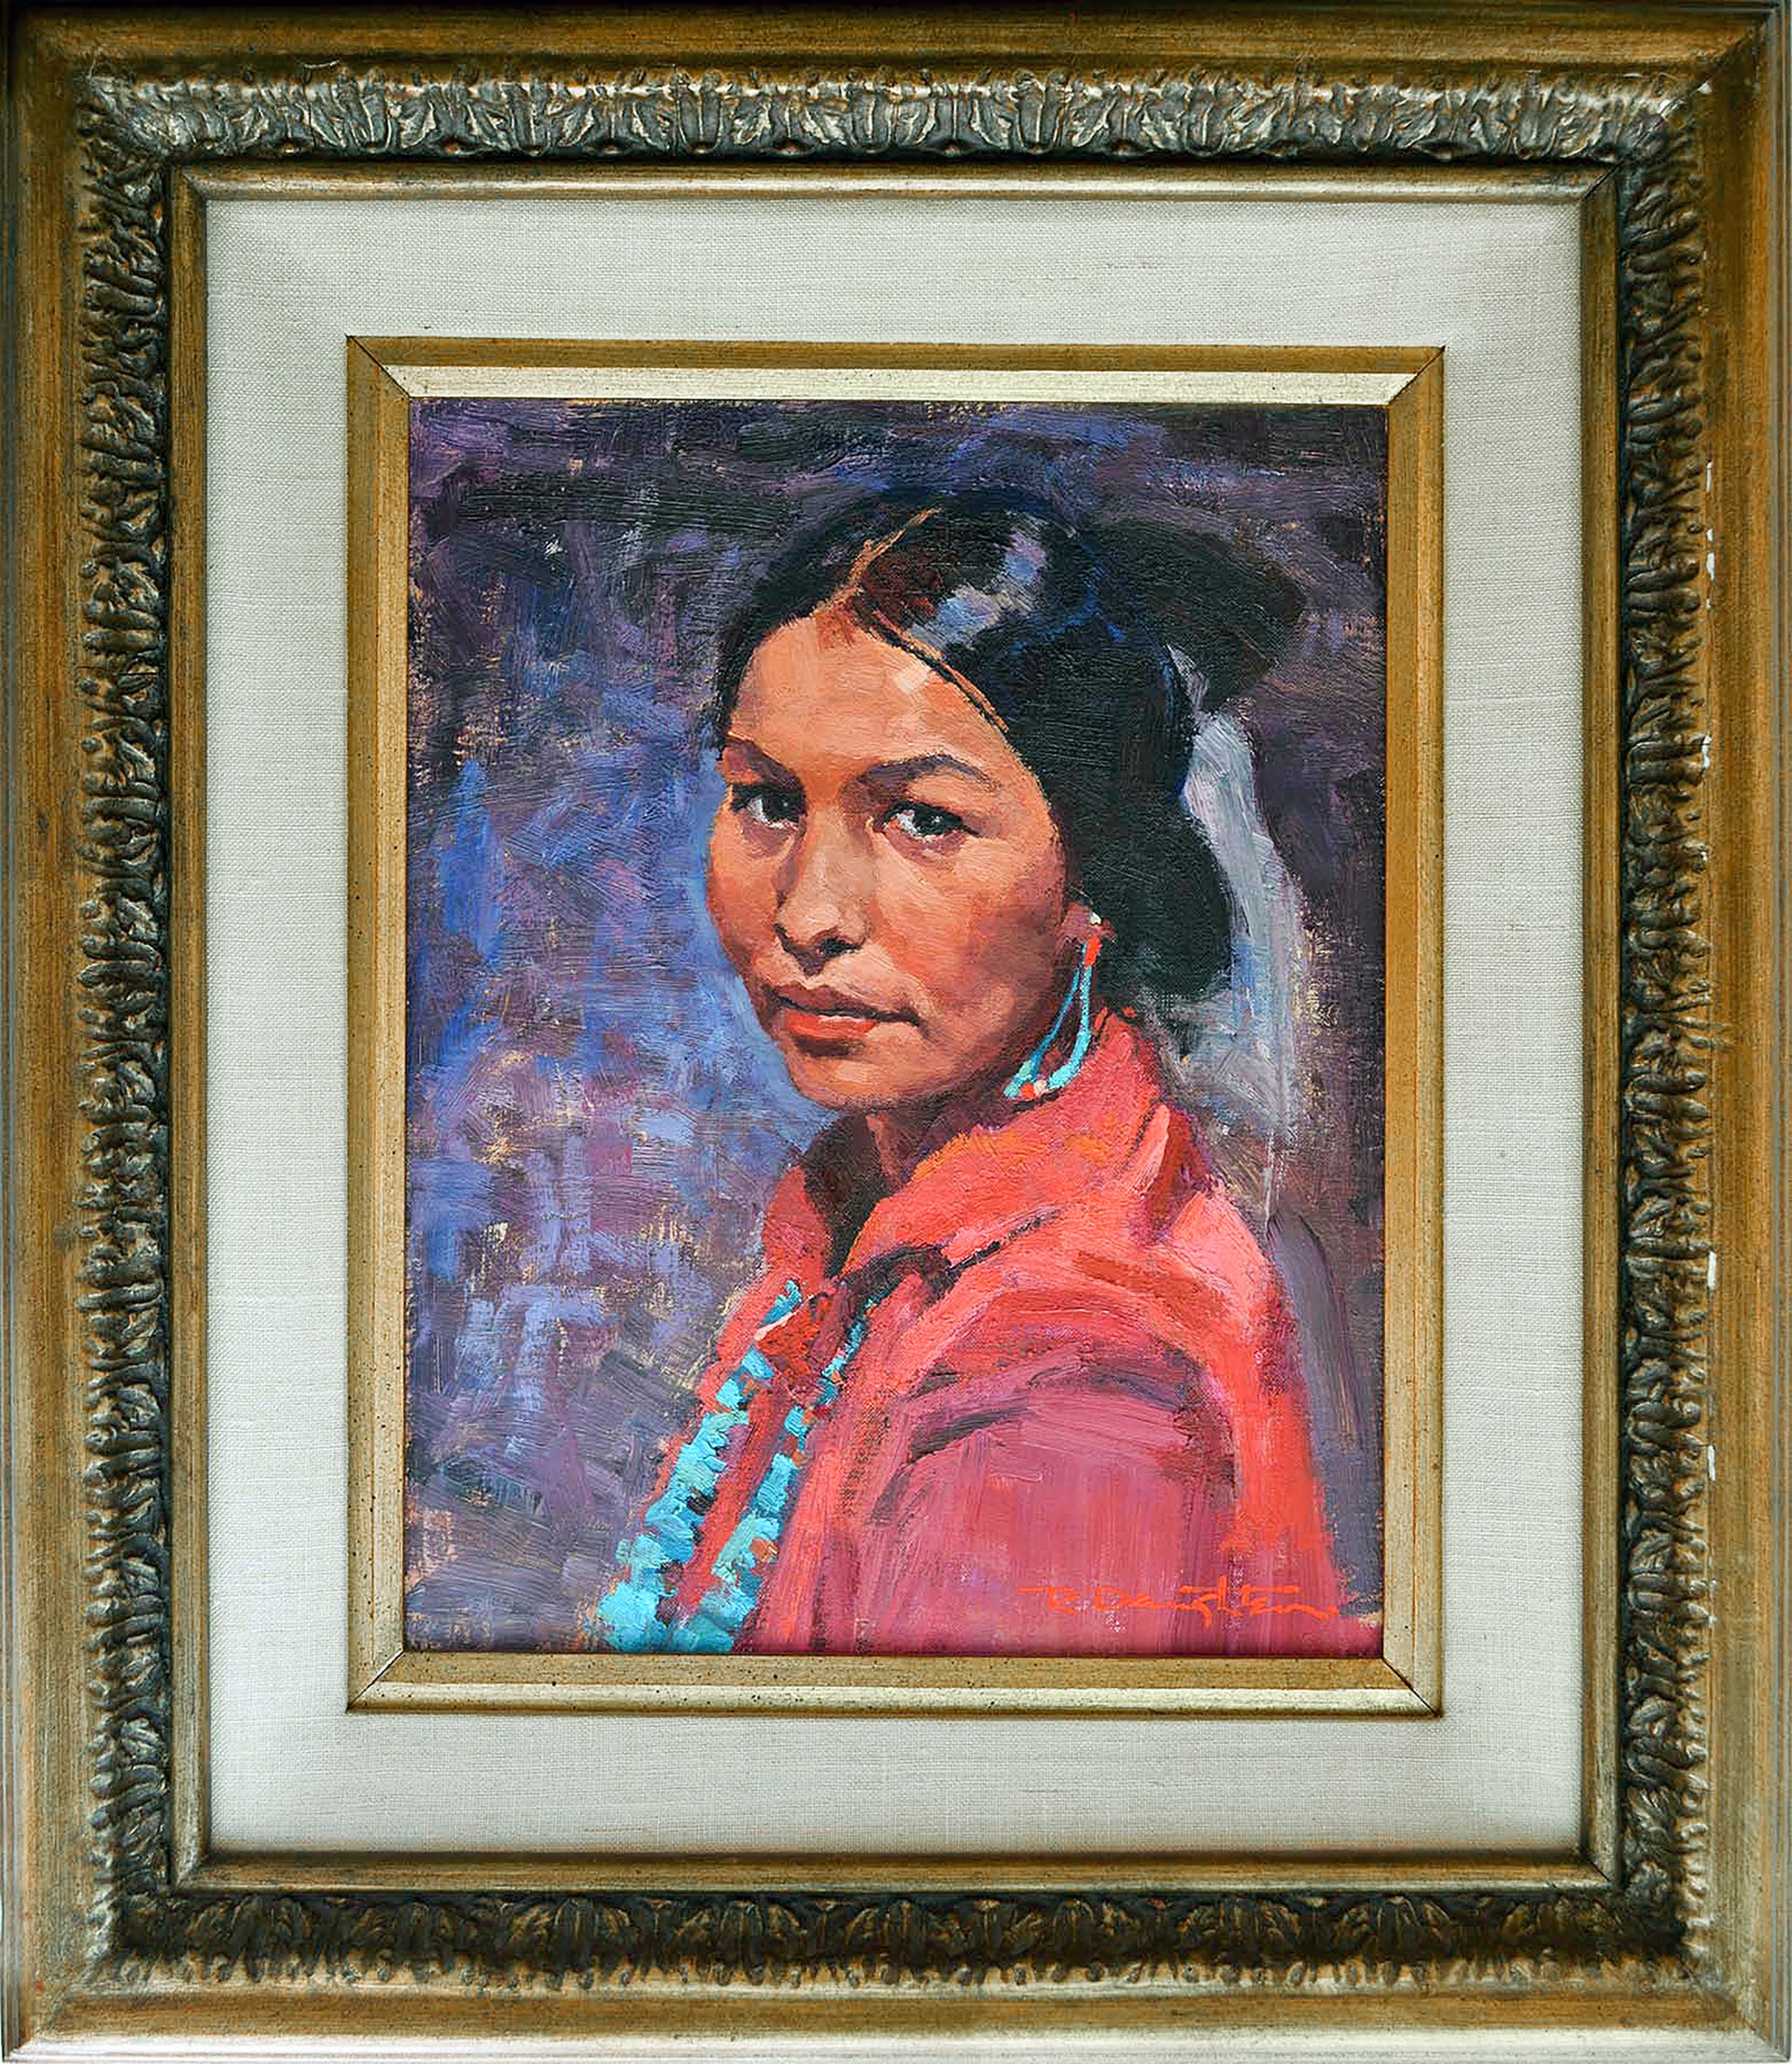 Navajo Woman by Robert Daughters (1929-2013)